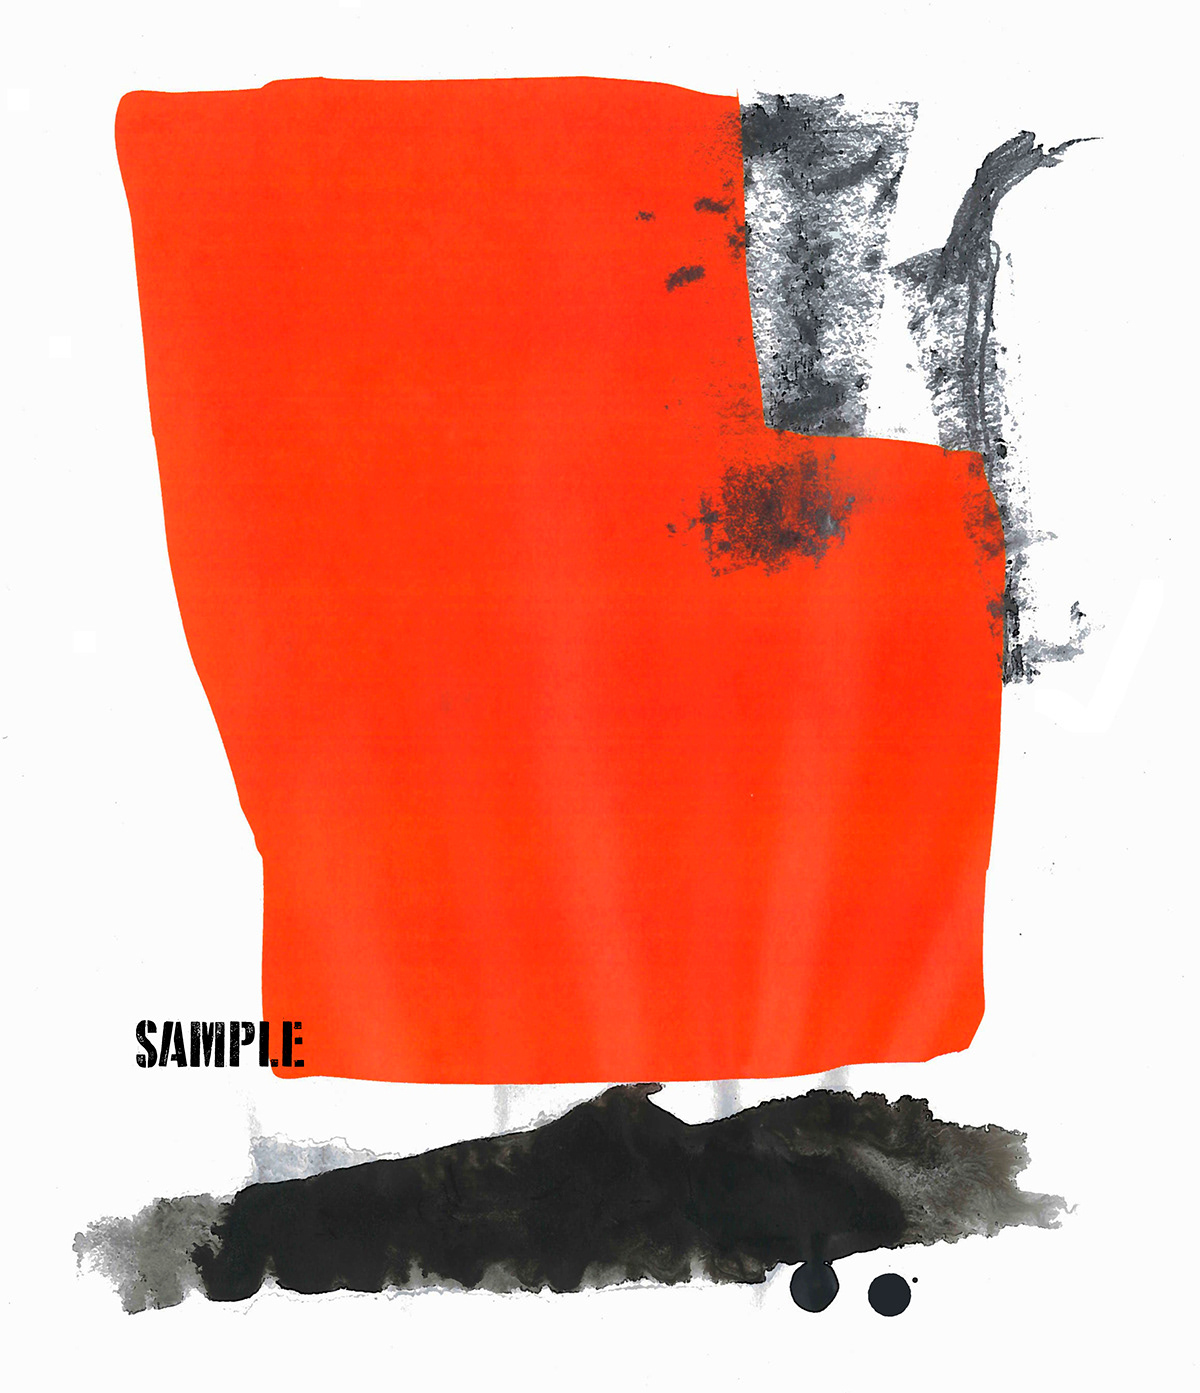 conceptual art sampling abstract orange Minimalism